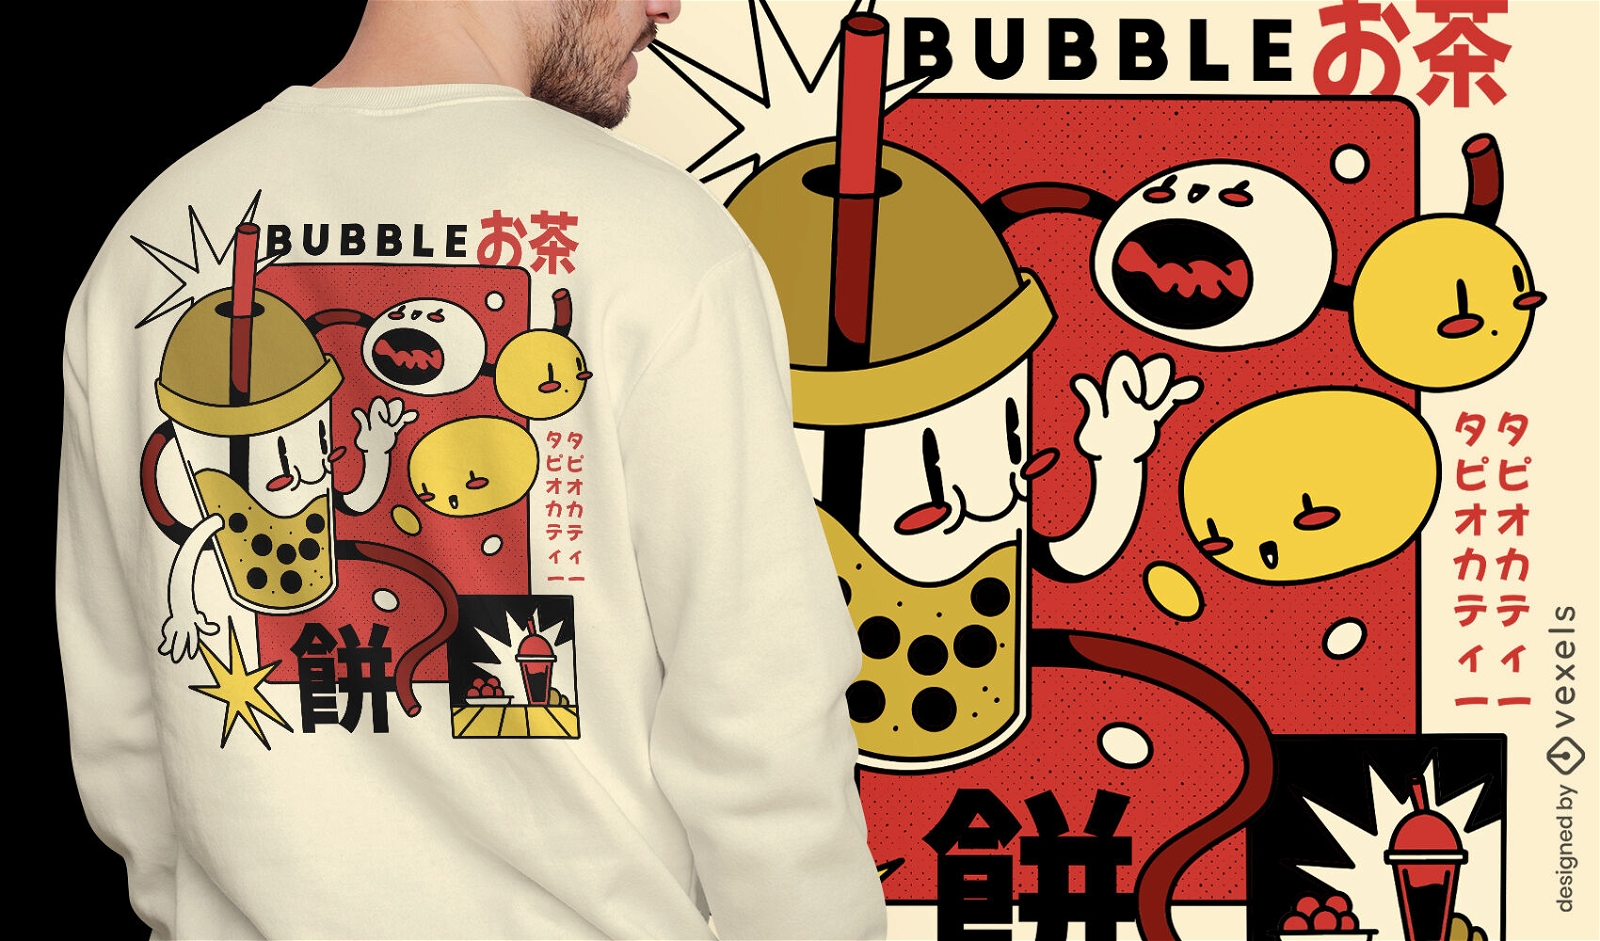 Bubble tea retro cartoon t-shirt design